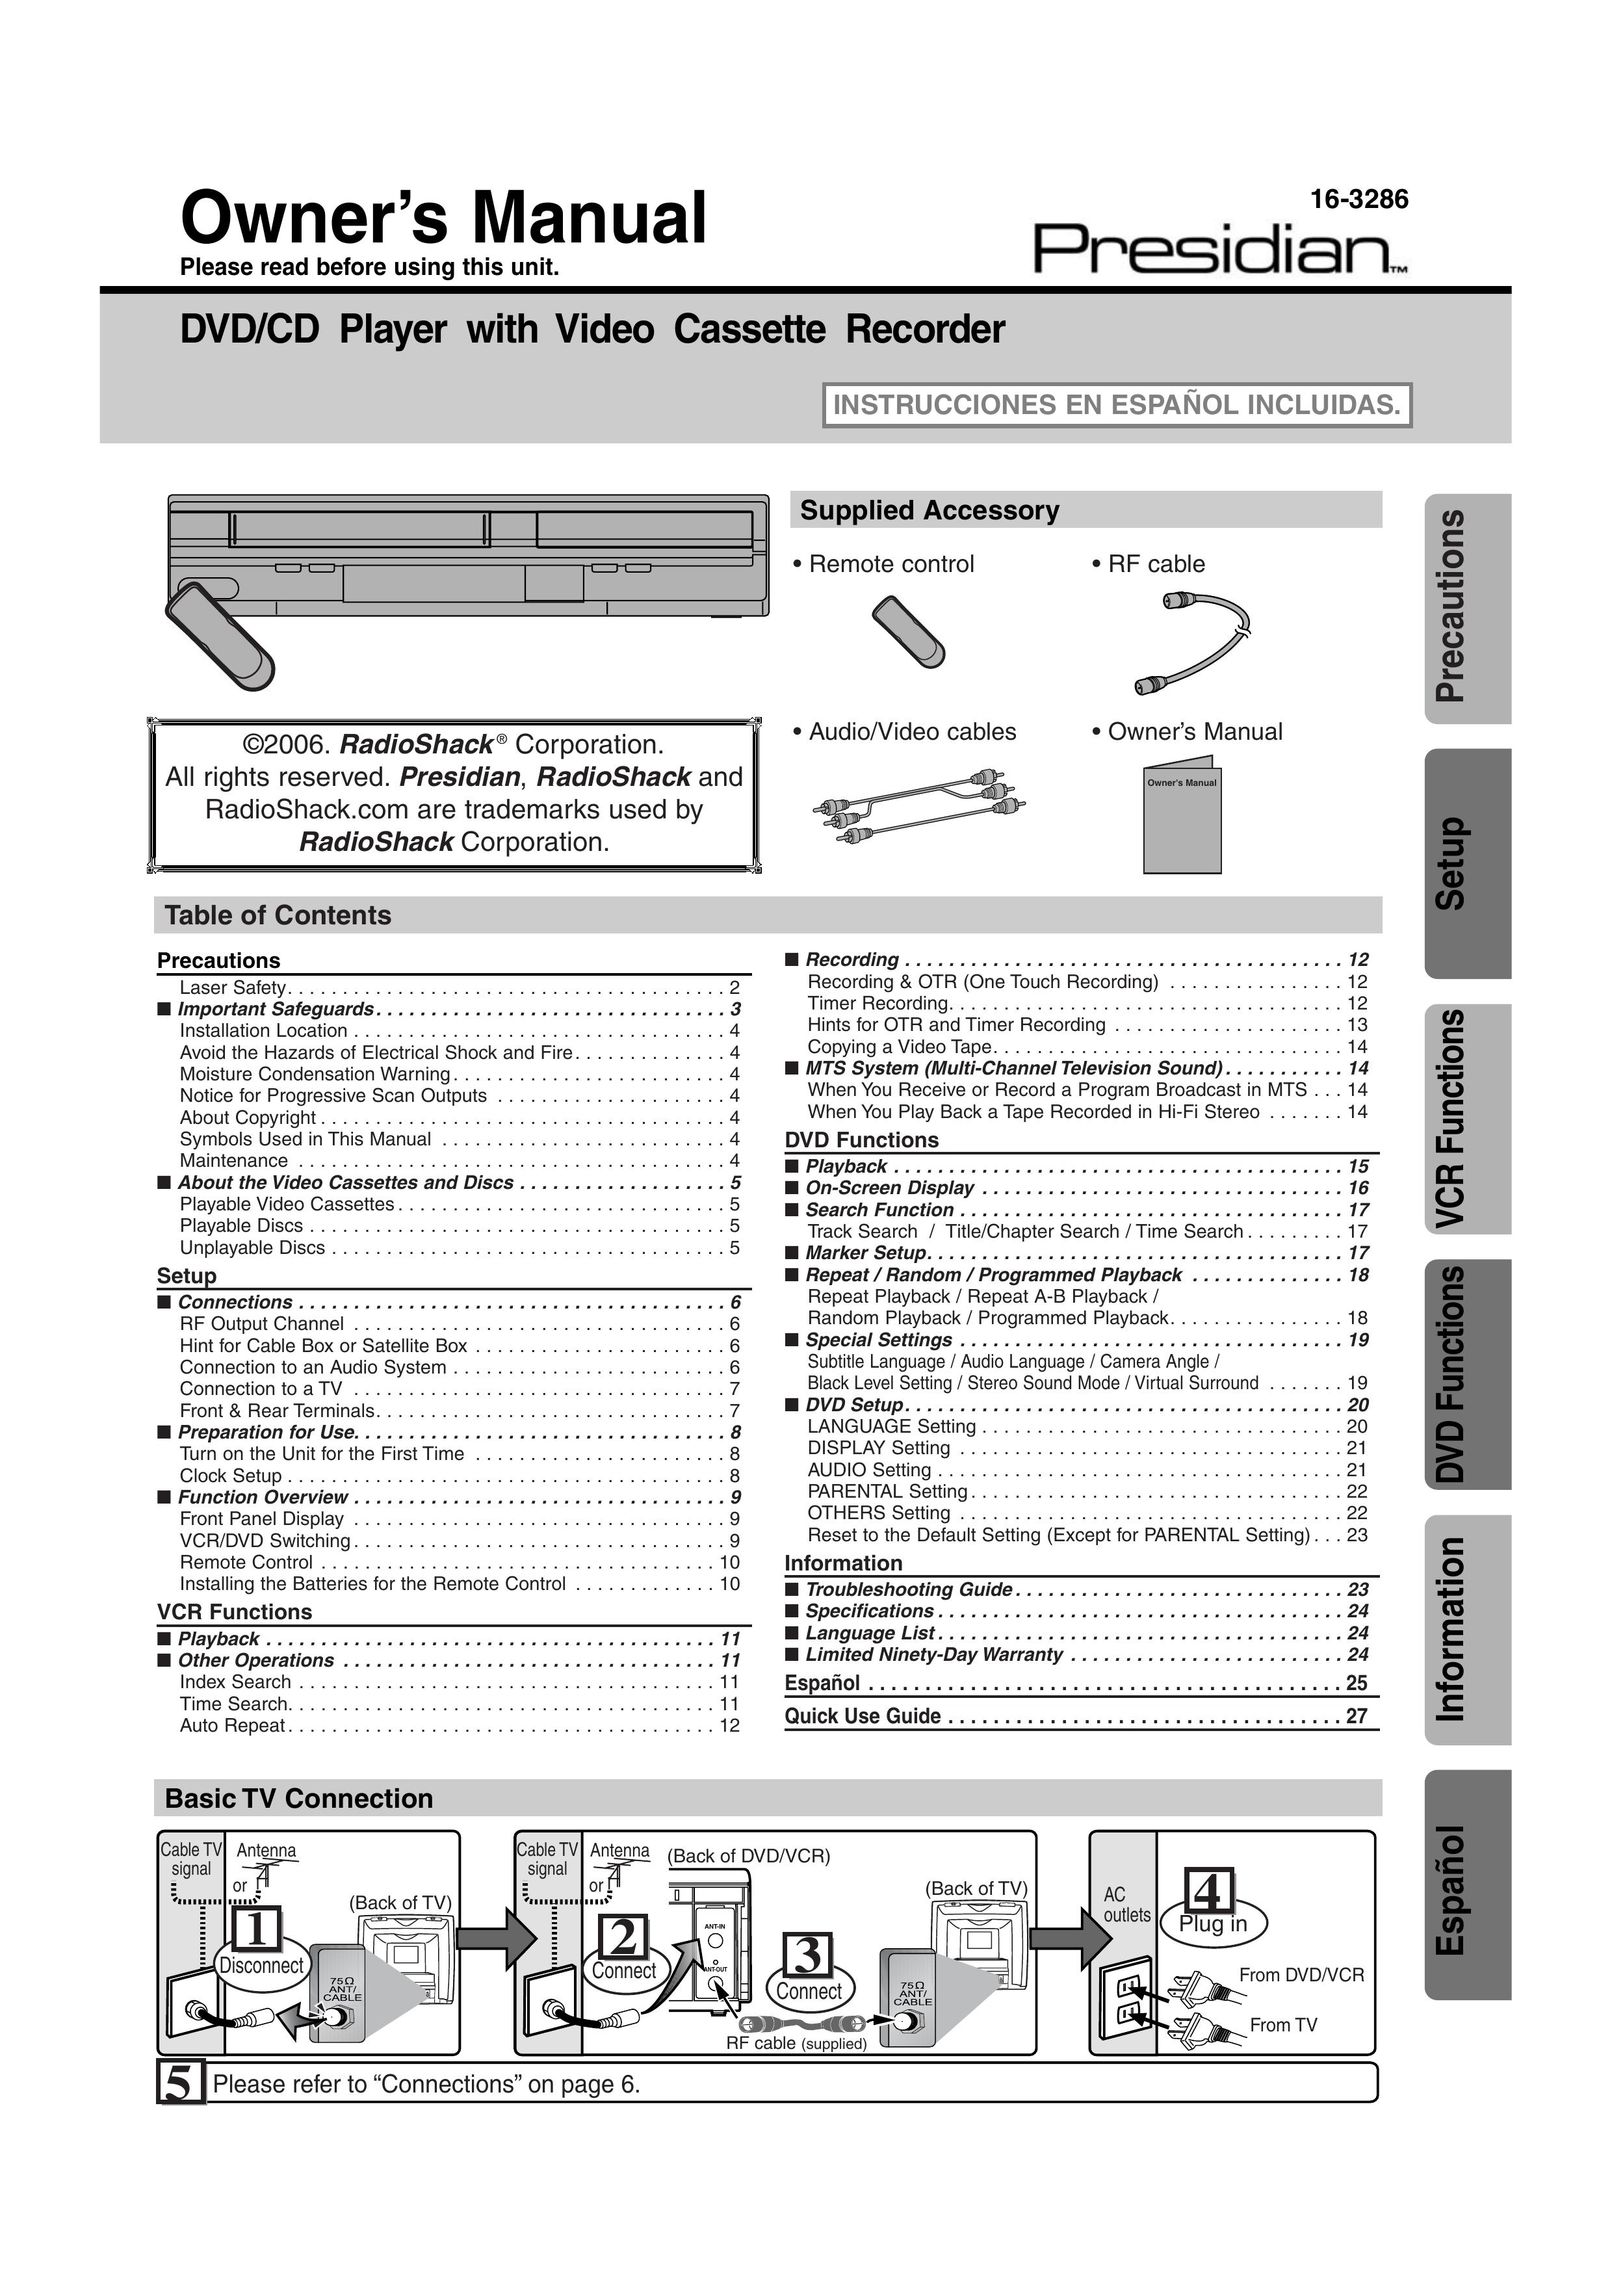 Radio Shack DVD / VCR DVD VCR Combo User Manual